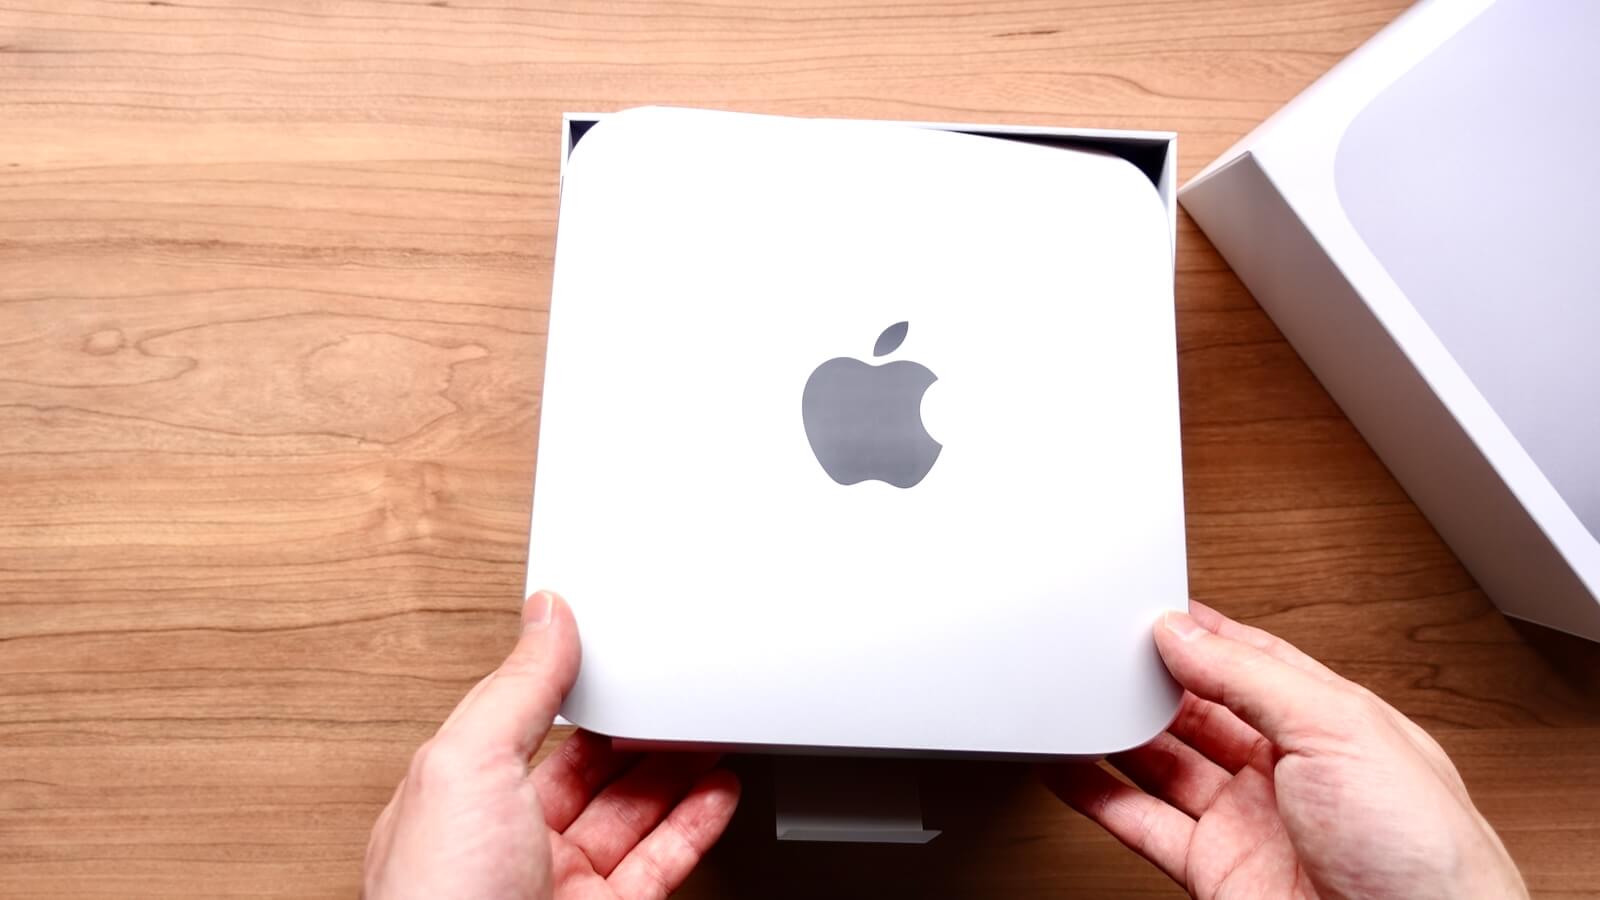 Apple Silicone Mac mini M1 opened